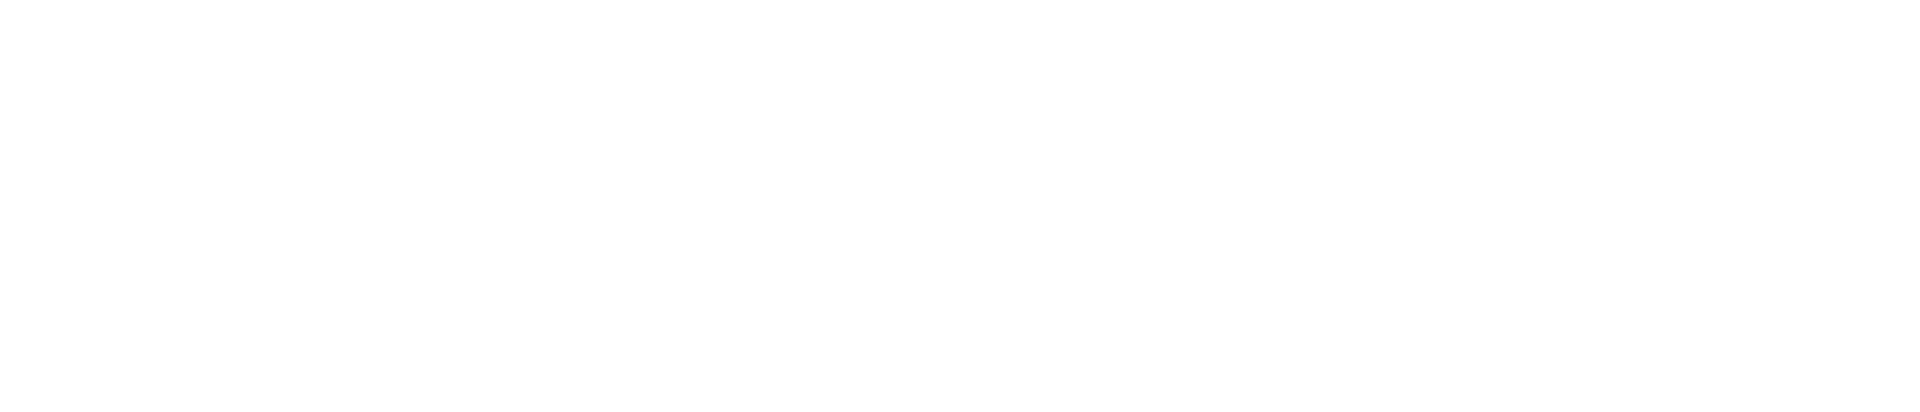 CATCØRE logo full white color